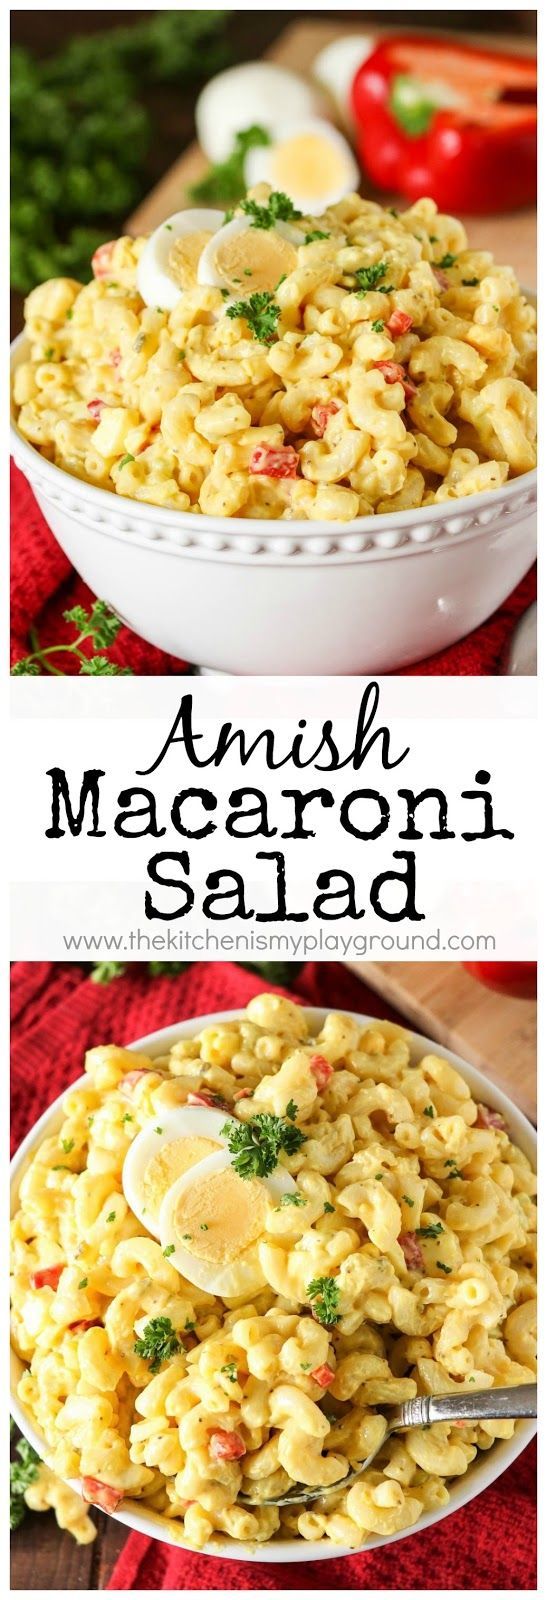 22 macaroni salad recipes ideas